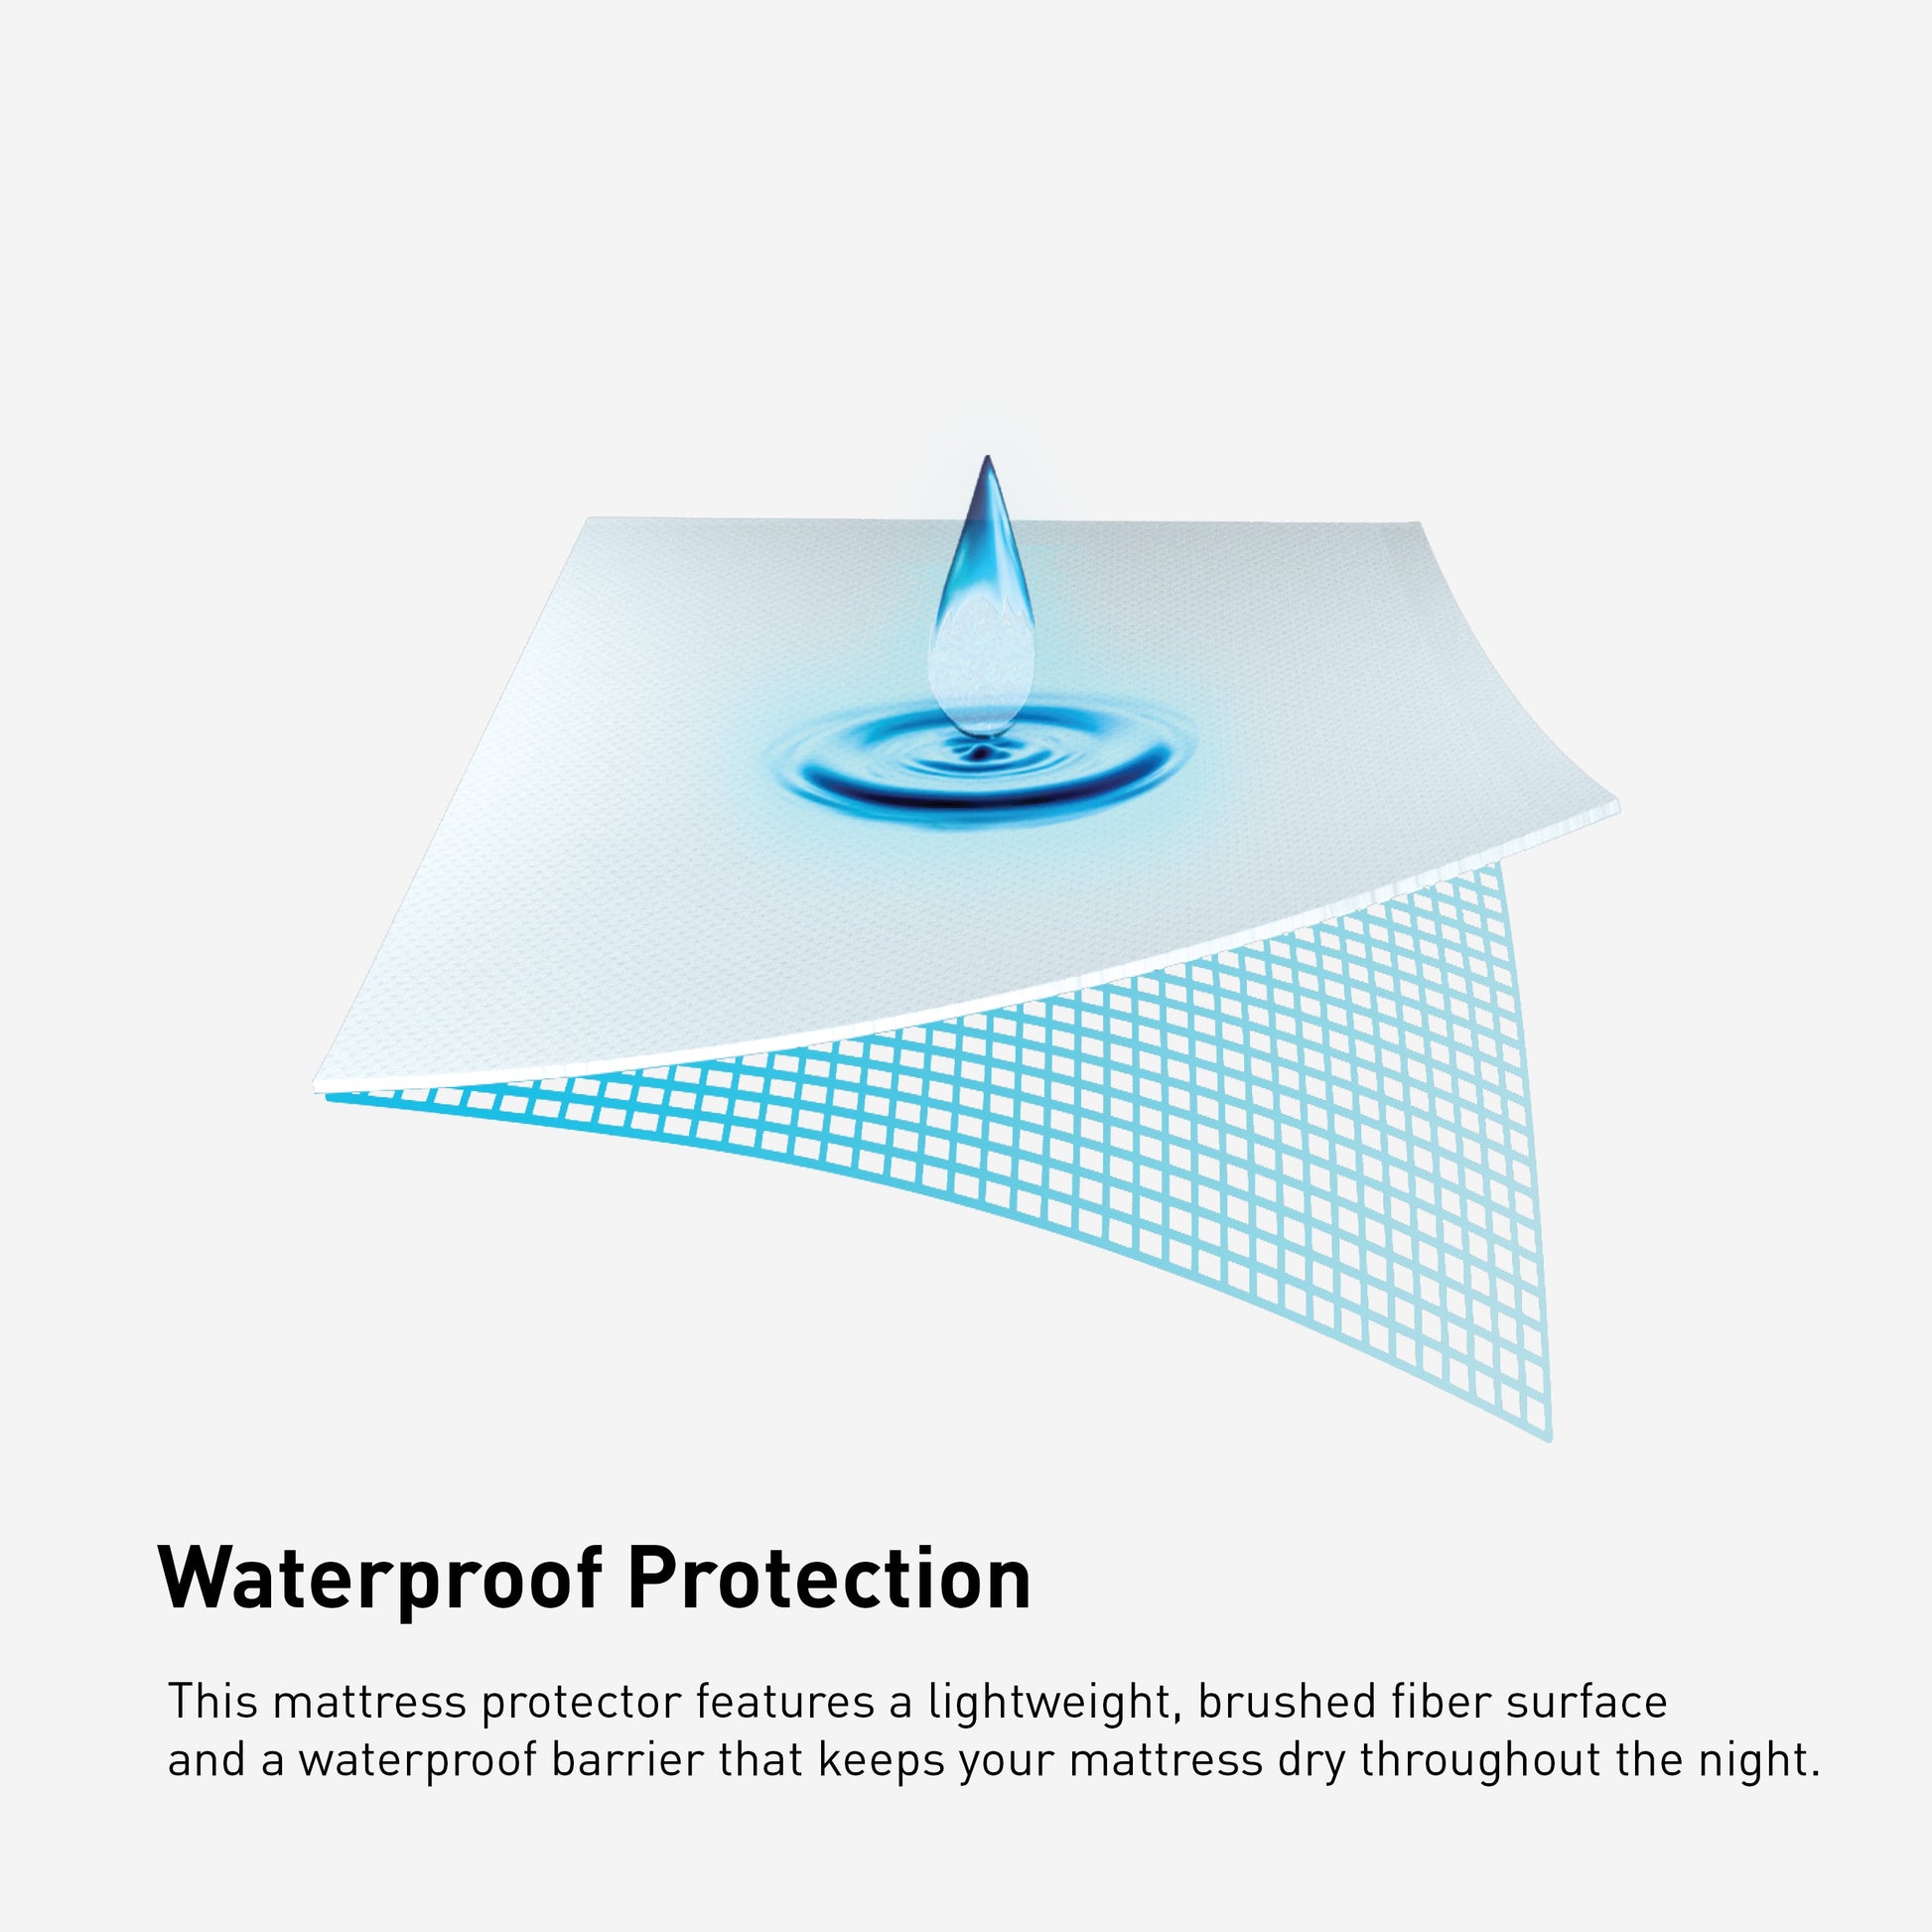 Bedgear iProtect Waterproof Mattress Protector waterproof protection